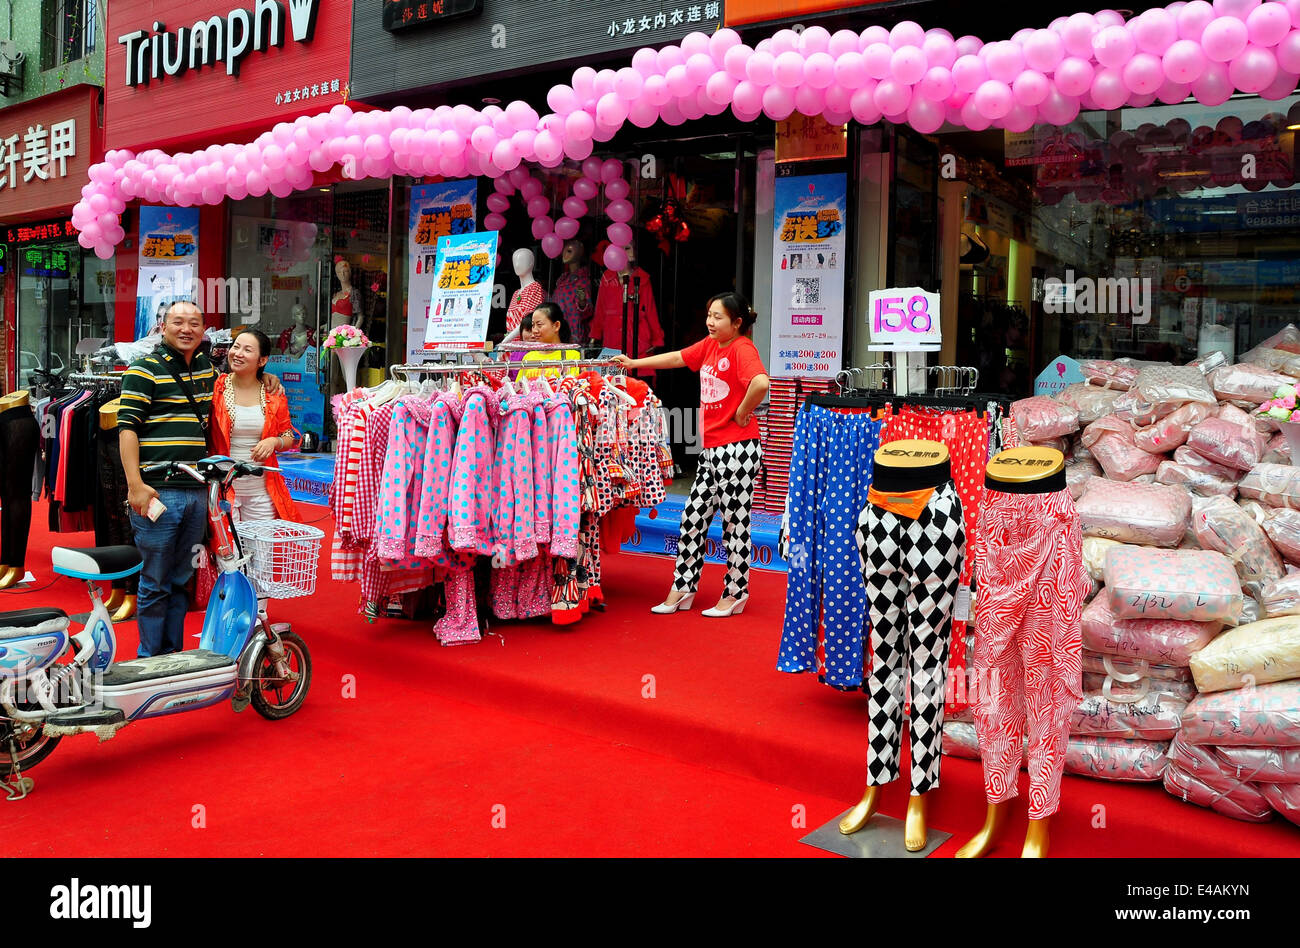 PENGZHOU, CHINA: Rosa Luftballons Girlanden schmücken ein neu eröffnetes Bekleidungsgeschäft Stockfoto